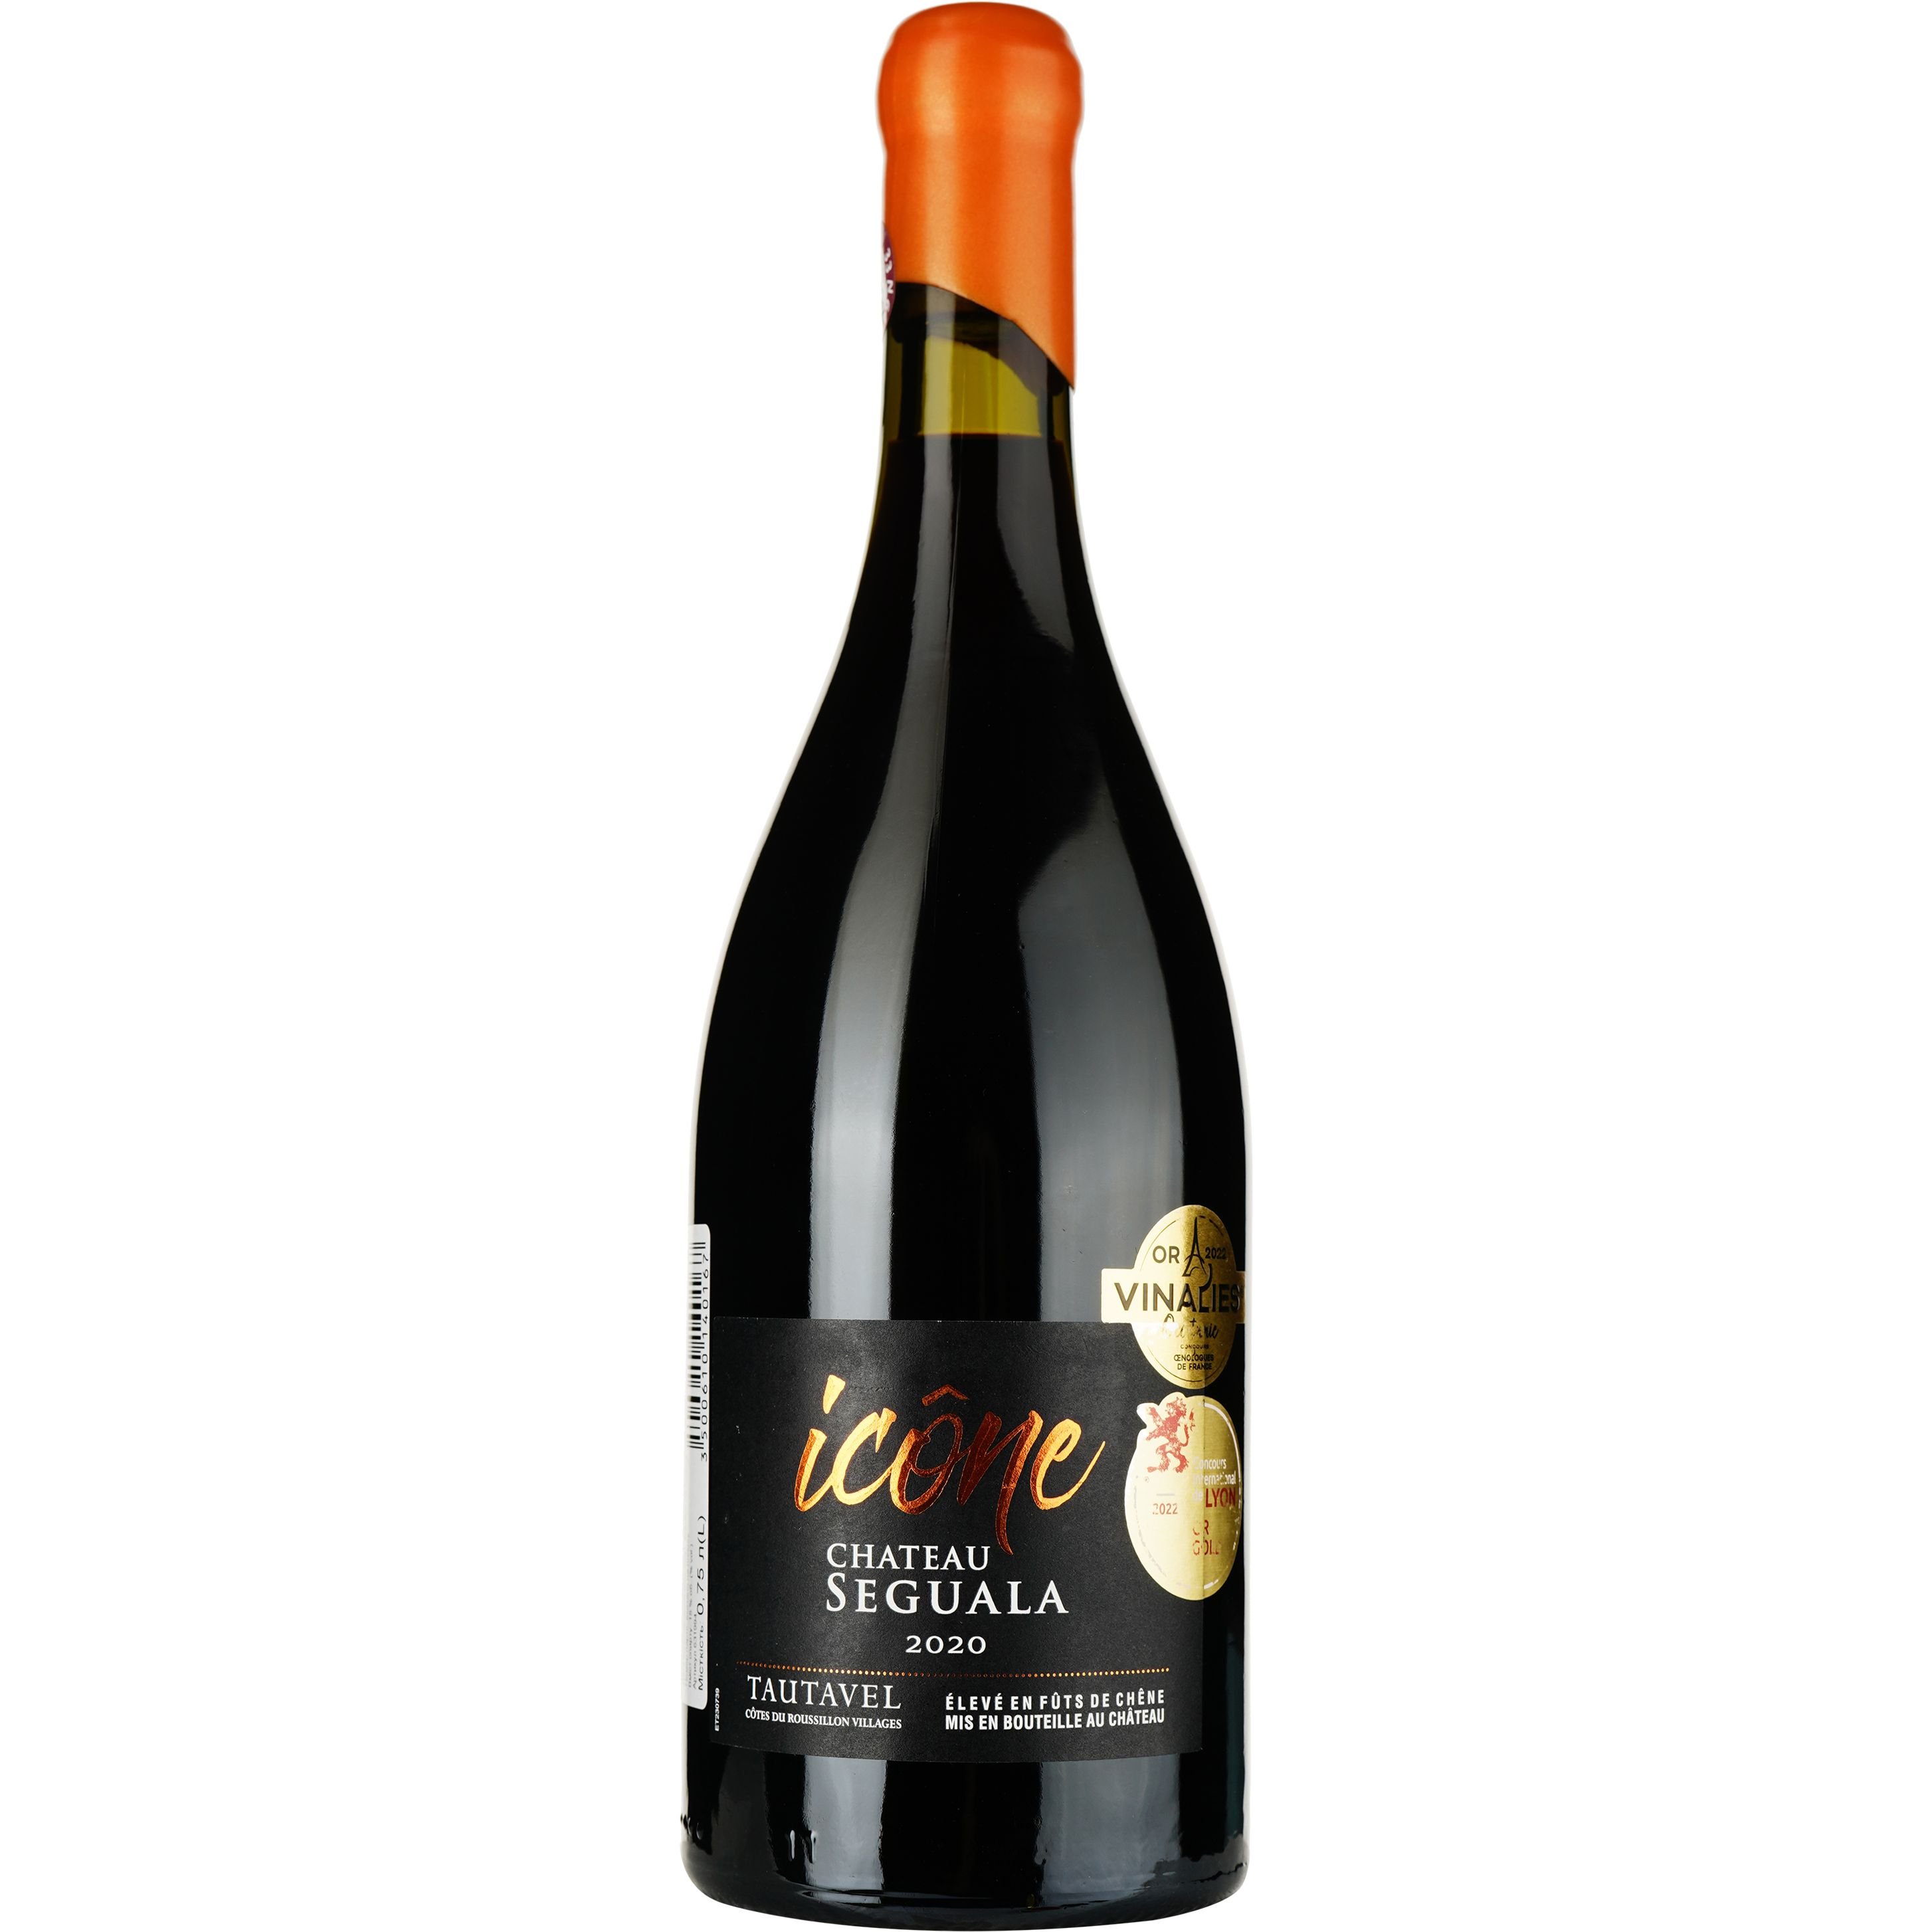 Вино Chateau Mas Seguala Icone AOP Cotes Du Roussillon Villages Tautavel 2020 красное сухое 0.75 л - фото 1